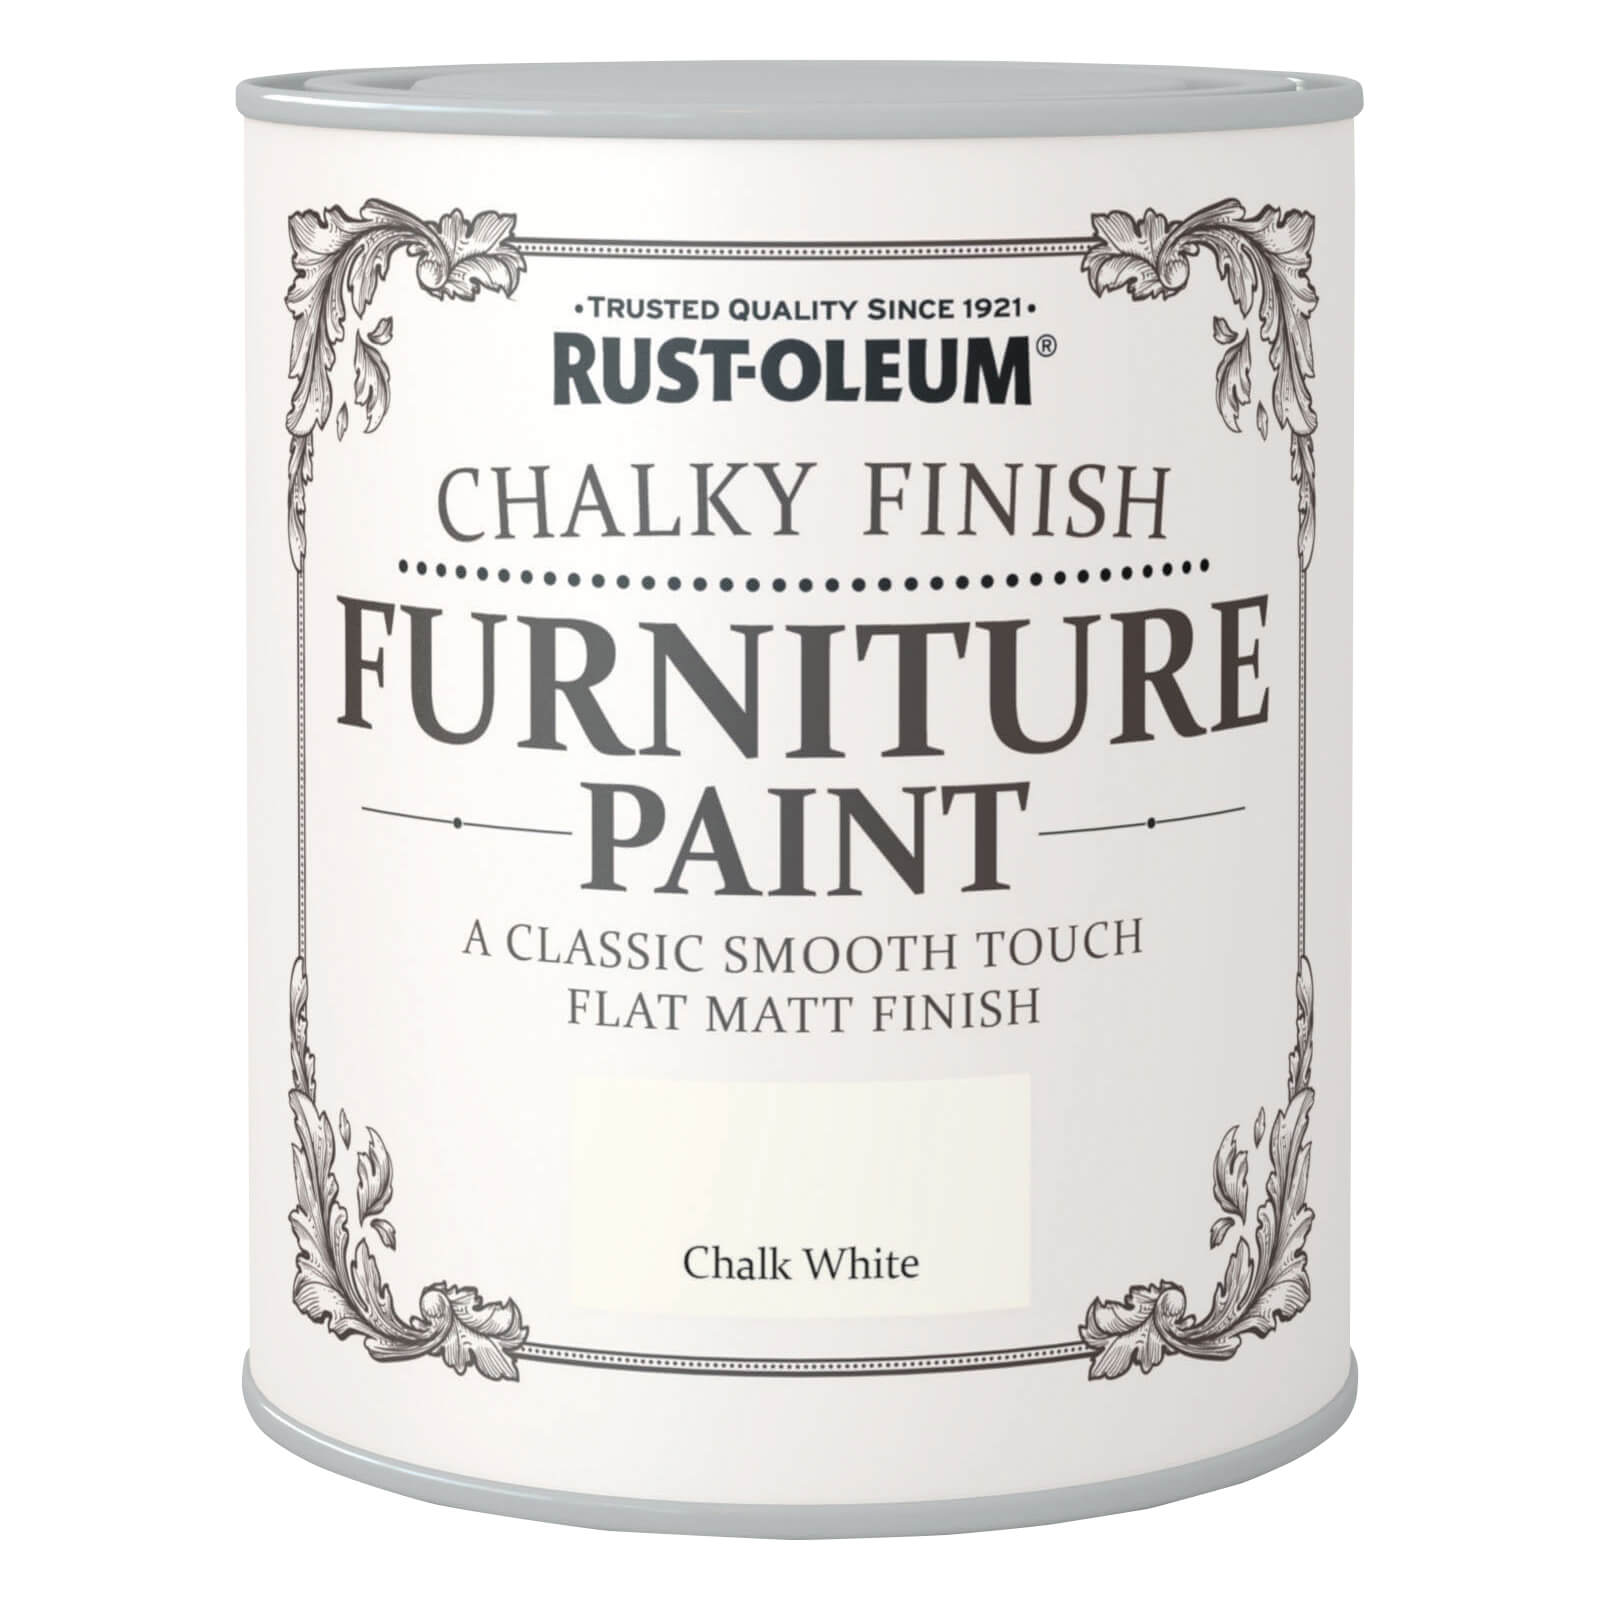 Photo of Rust-oleum Chalky Furniturepaint Chalk White - 2.5l